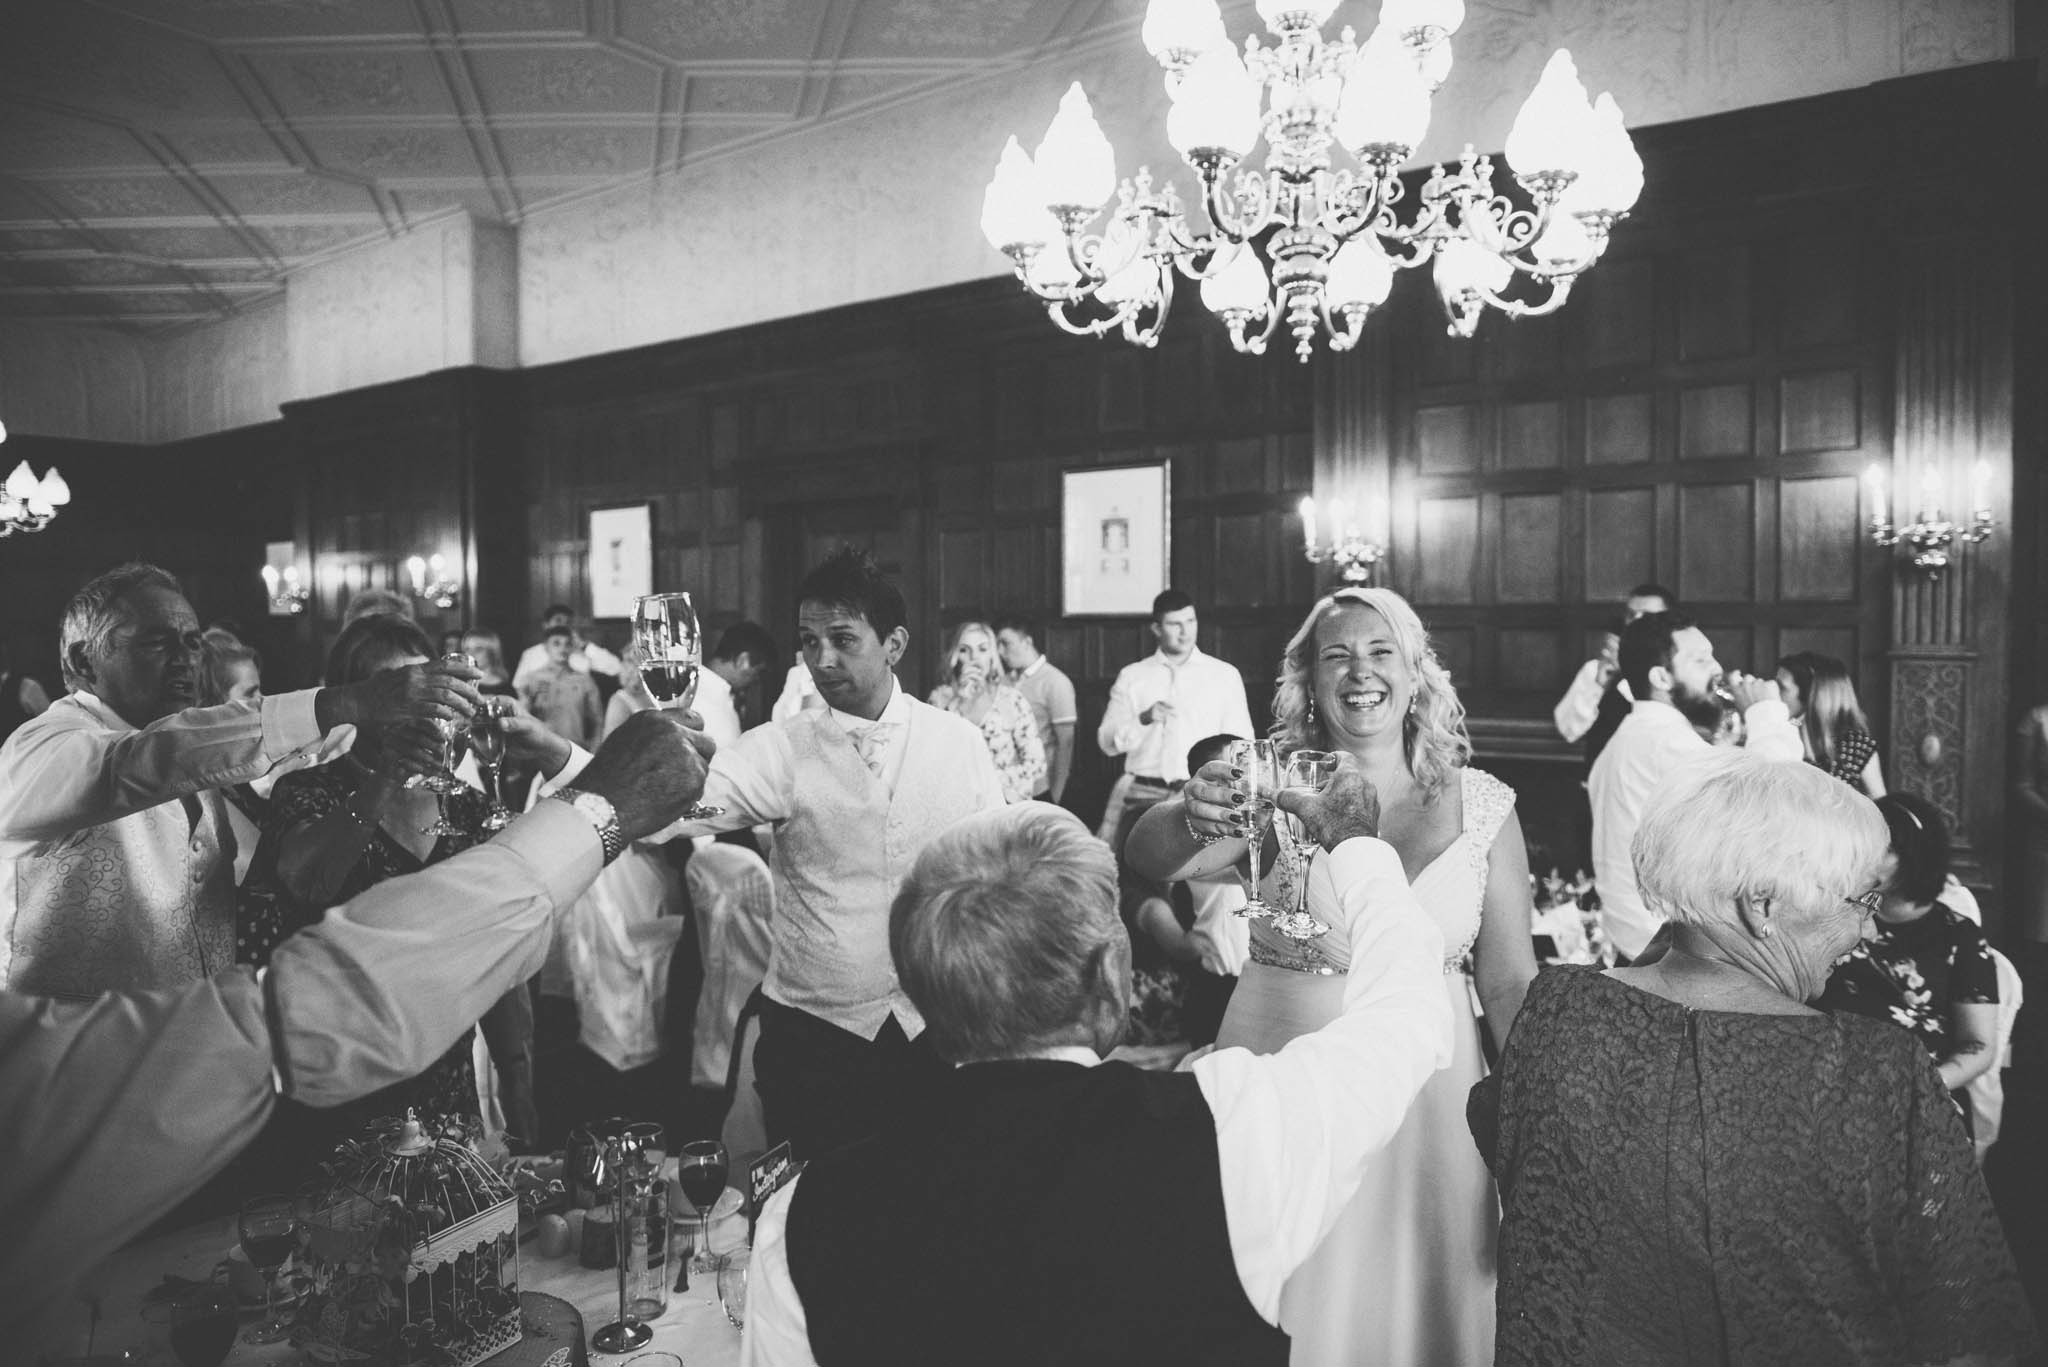 cheers-2-wedding-blog-scott-stockwell-photography-end-2017.jpg